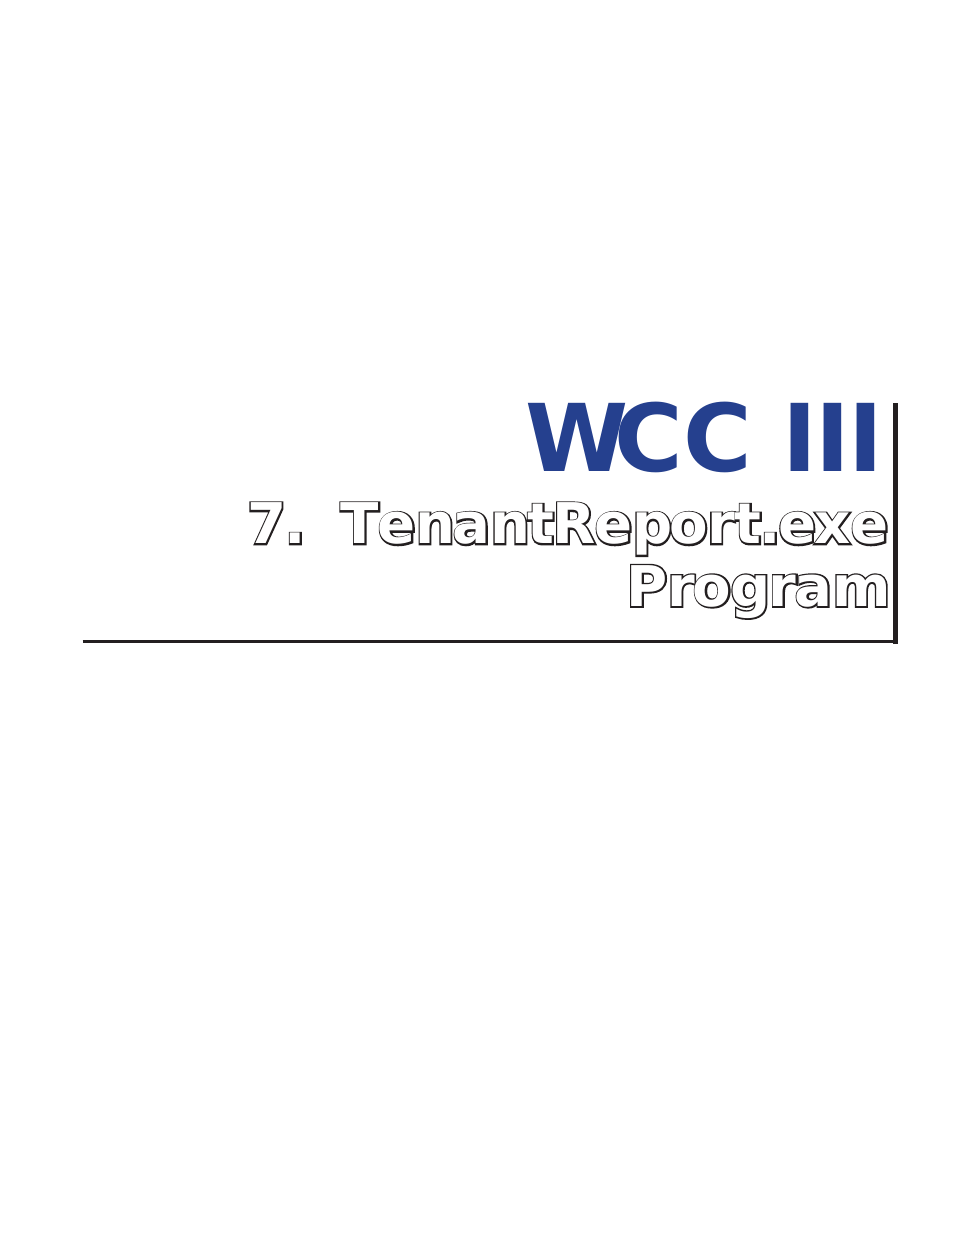 WCC III part 8